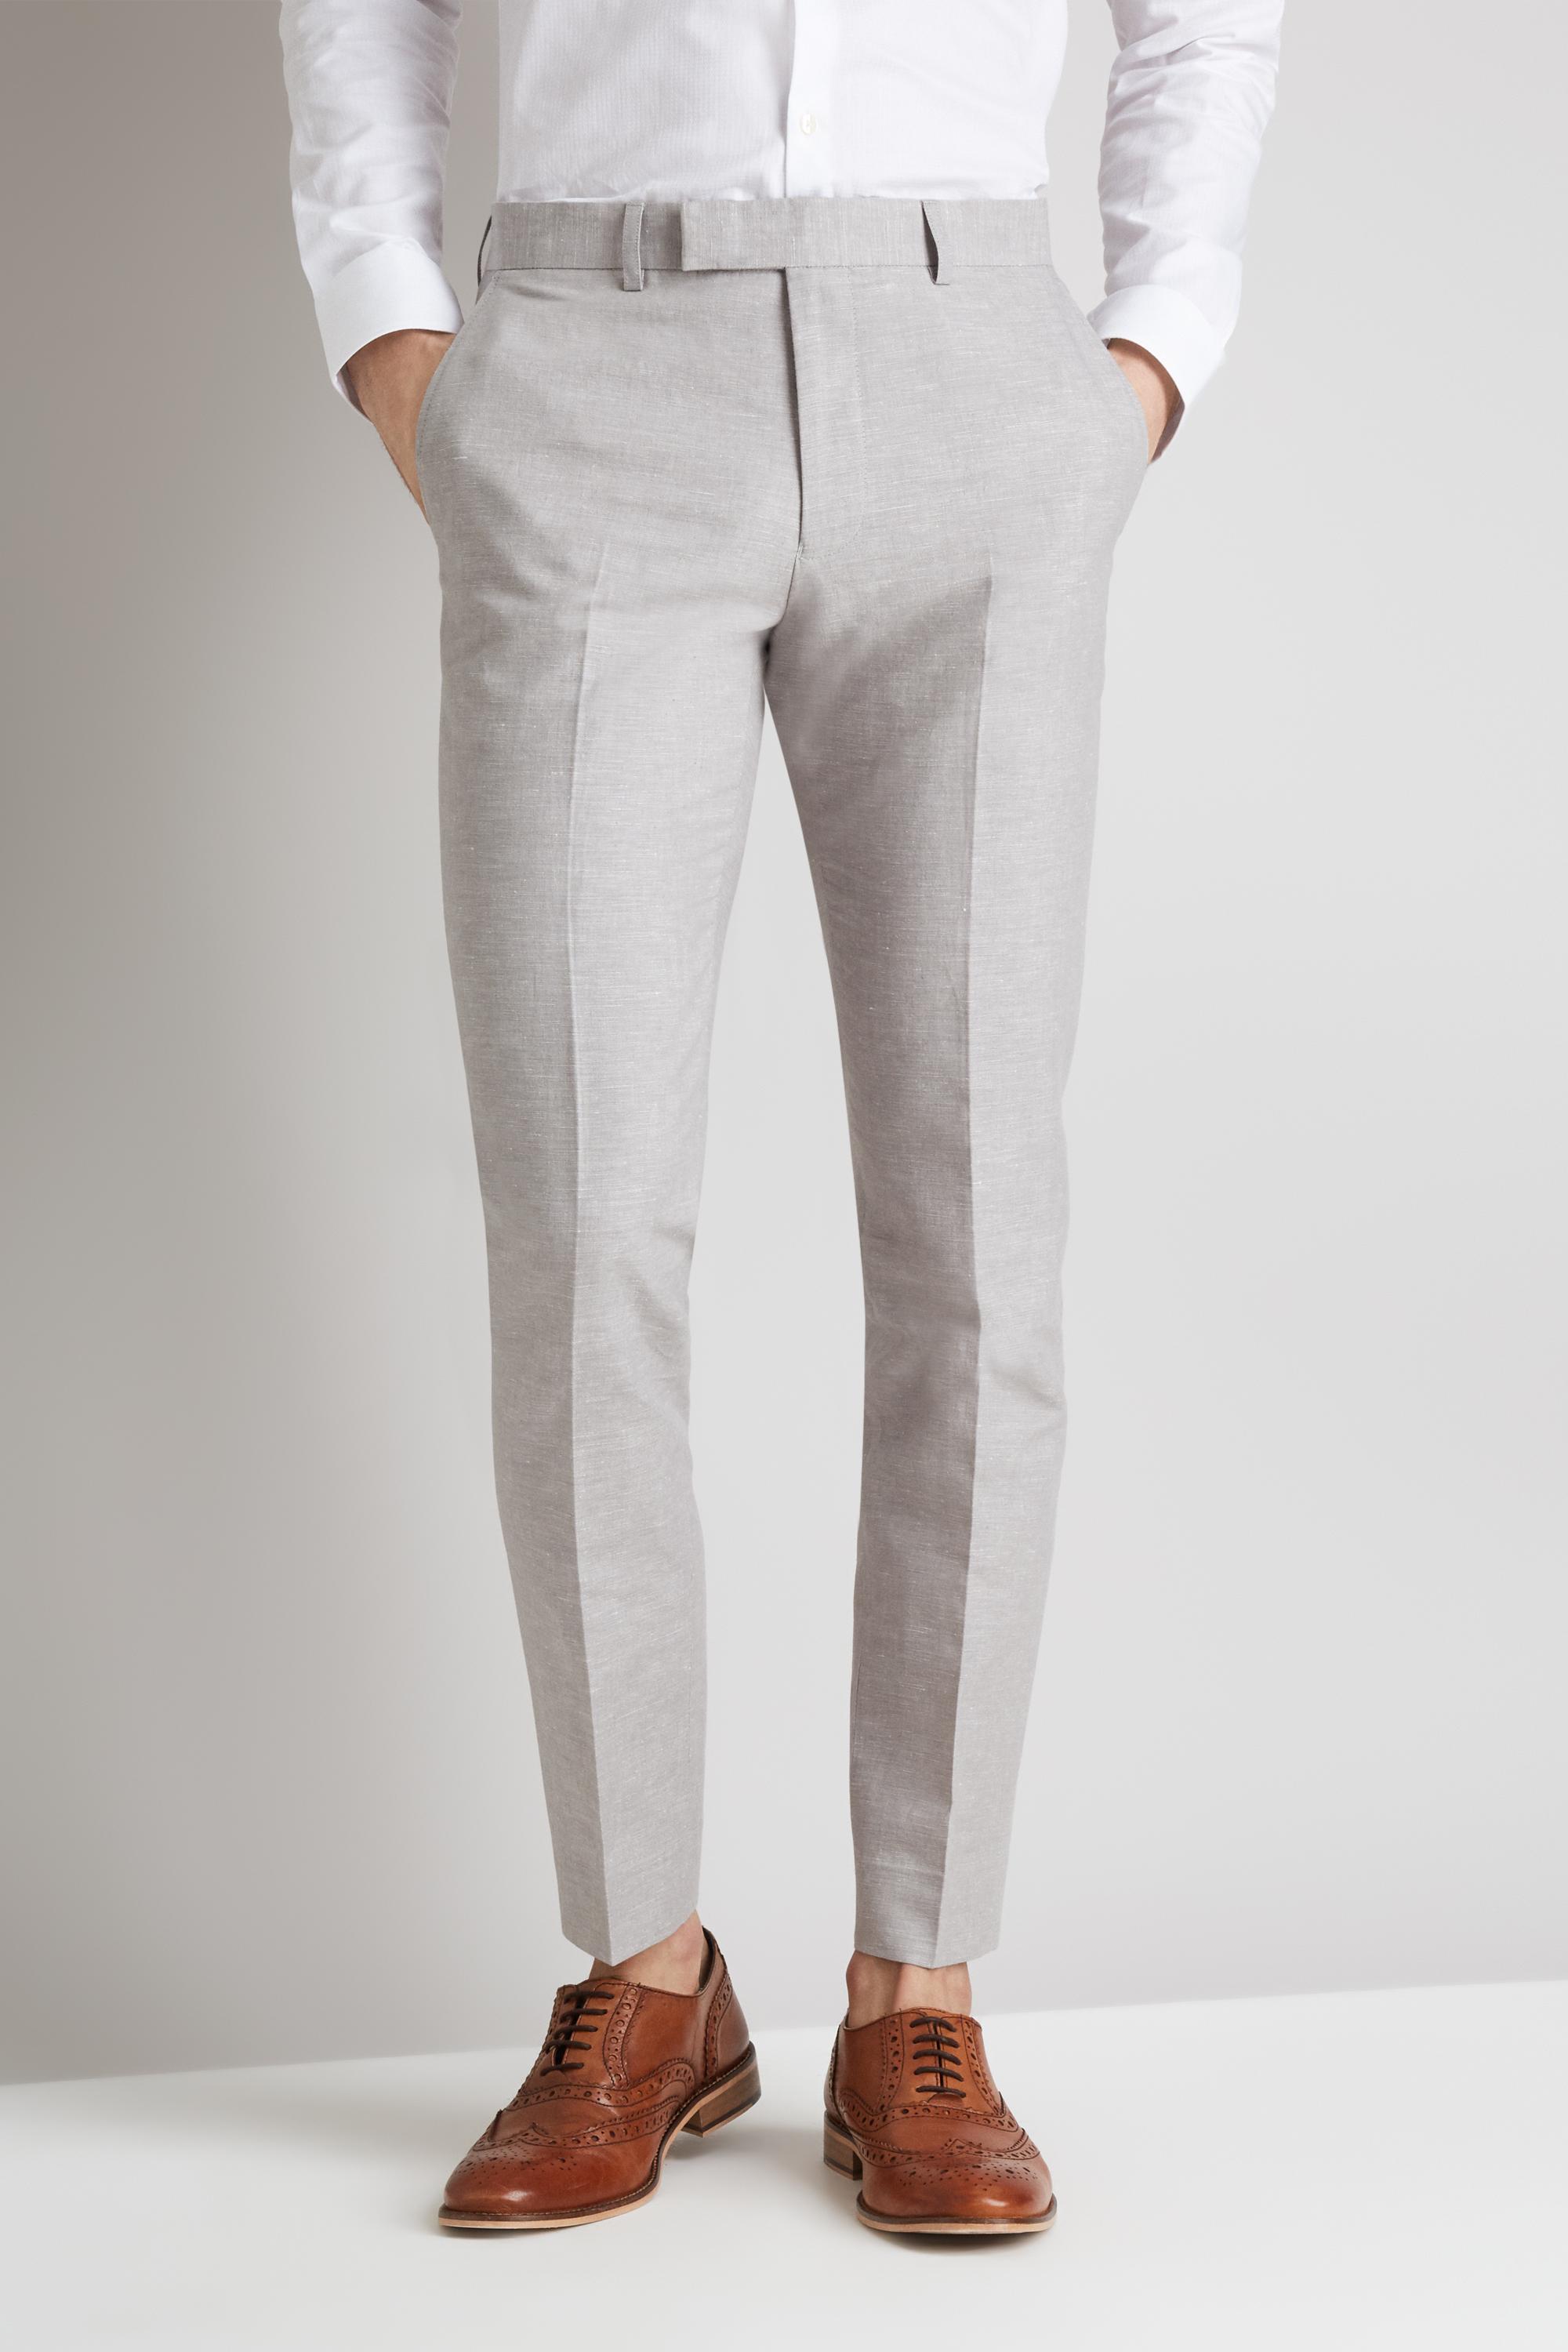 Moss London Light Grey Linen Cotton Linen Trousers in Gray for Men - Lyst